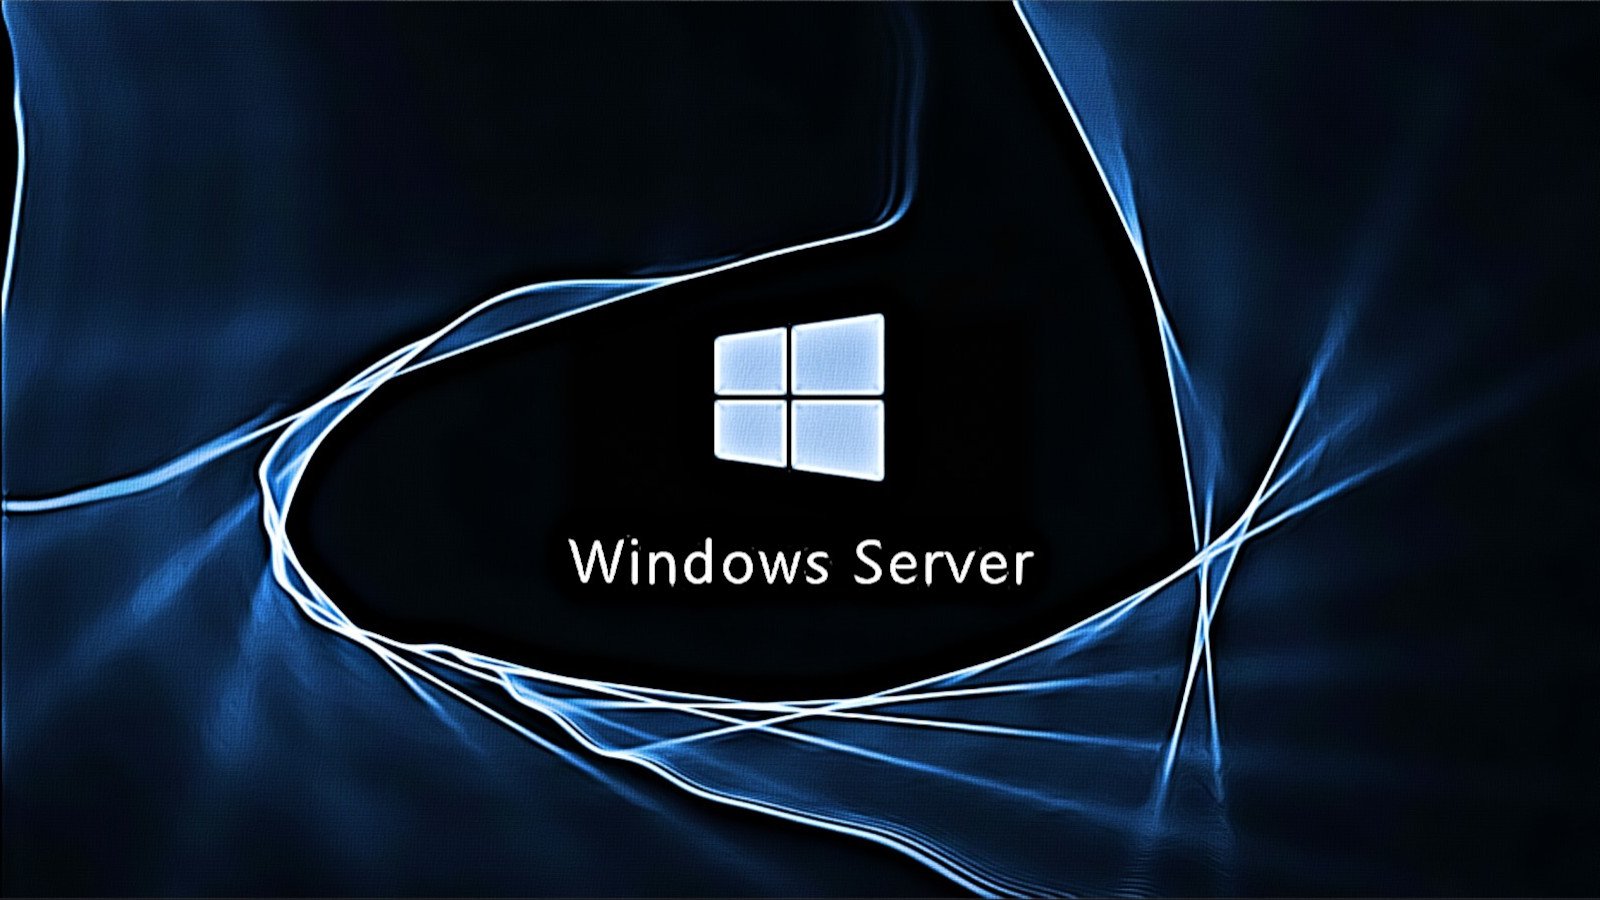 Windows Server logo in blue flames